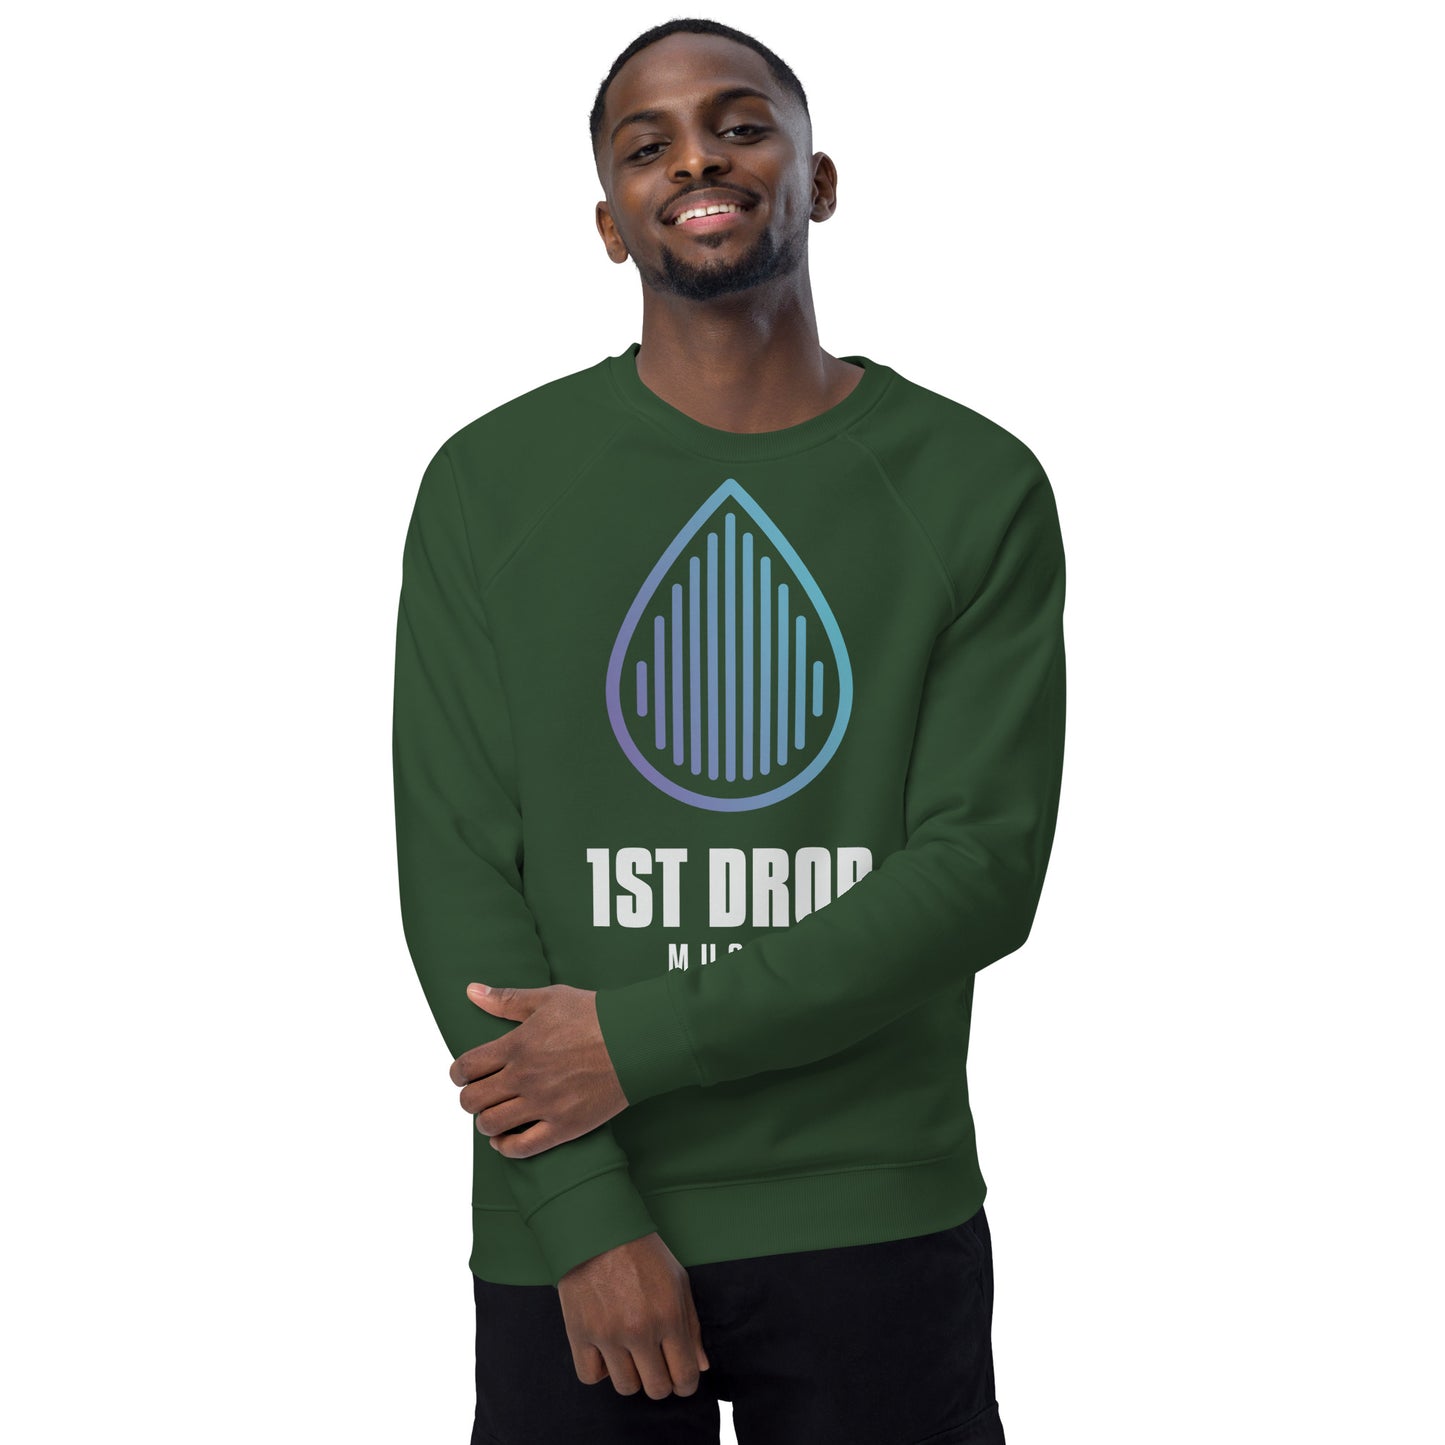 1st Drop Music - Unisex organic raglan sweatshirt